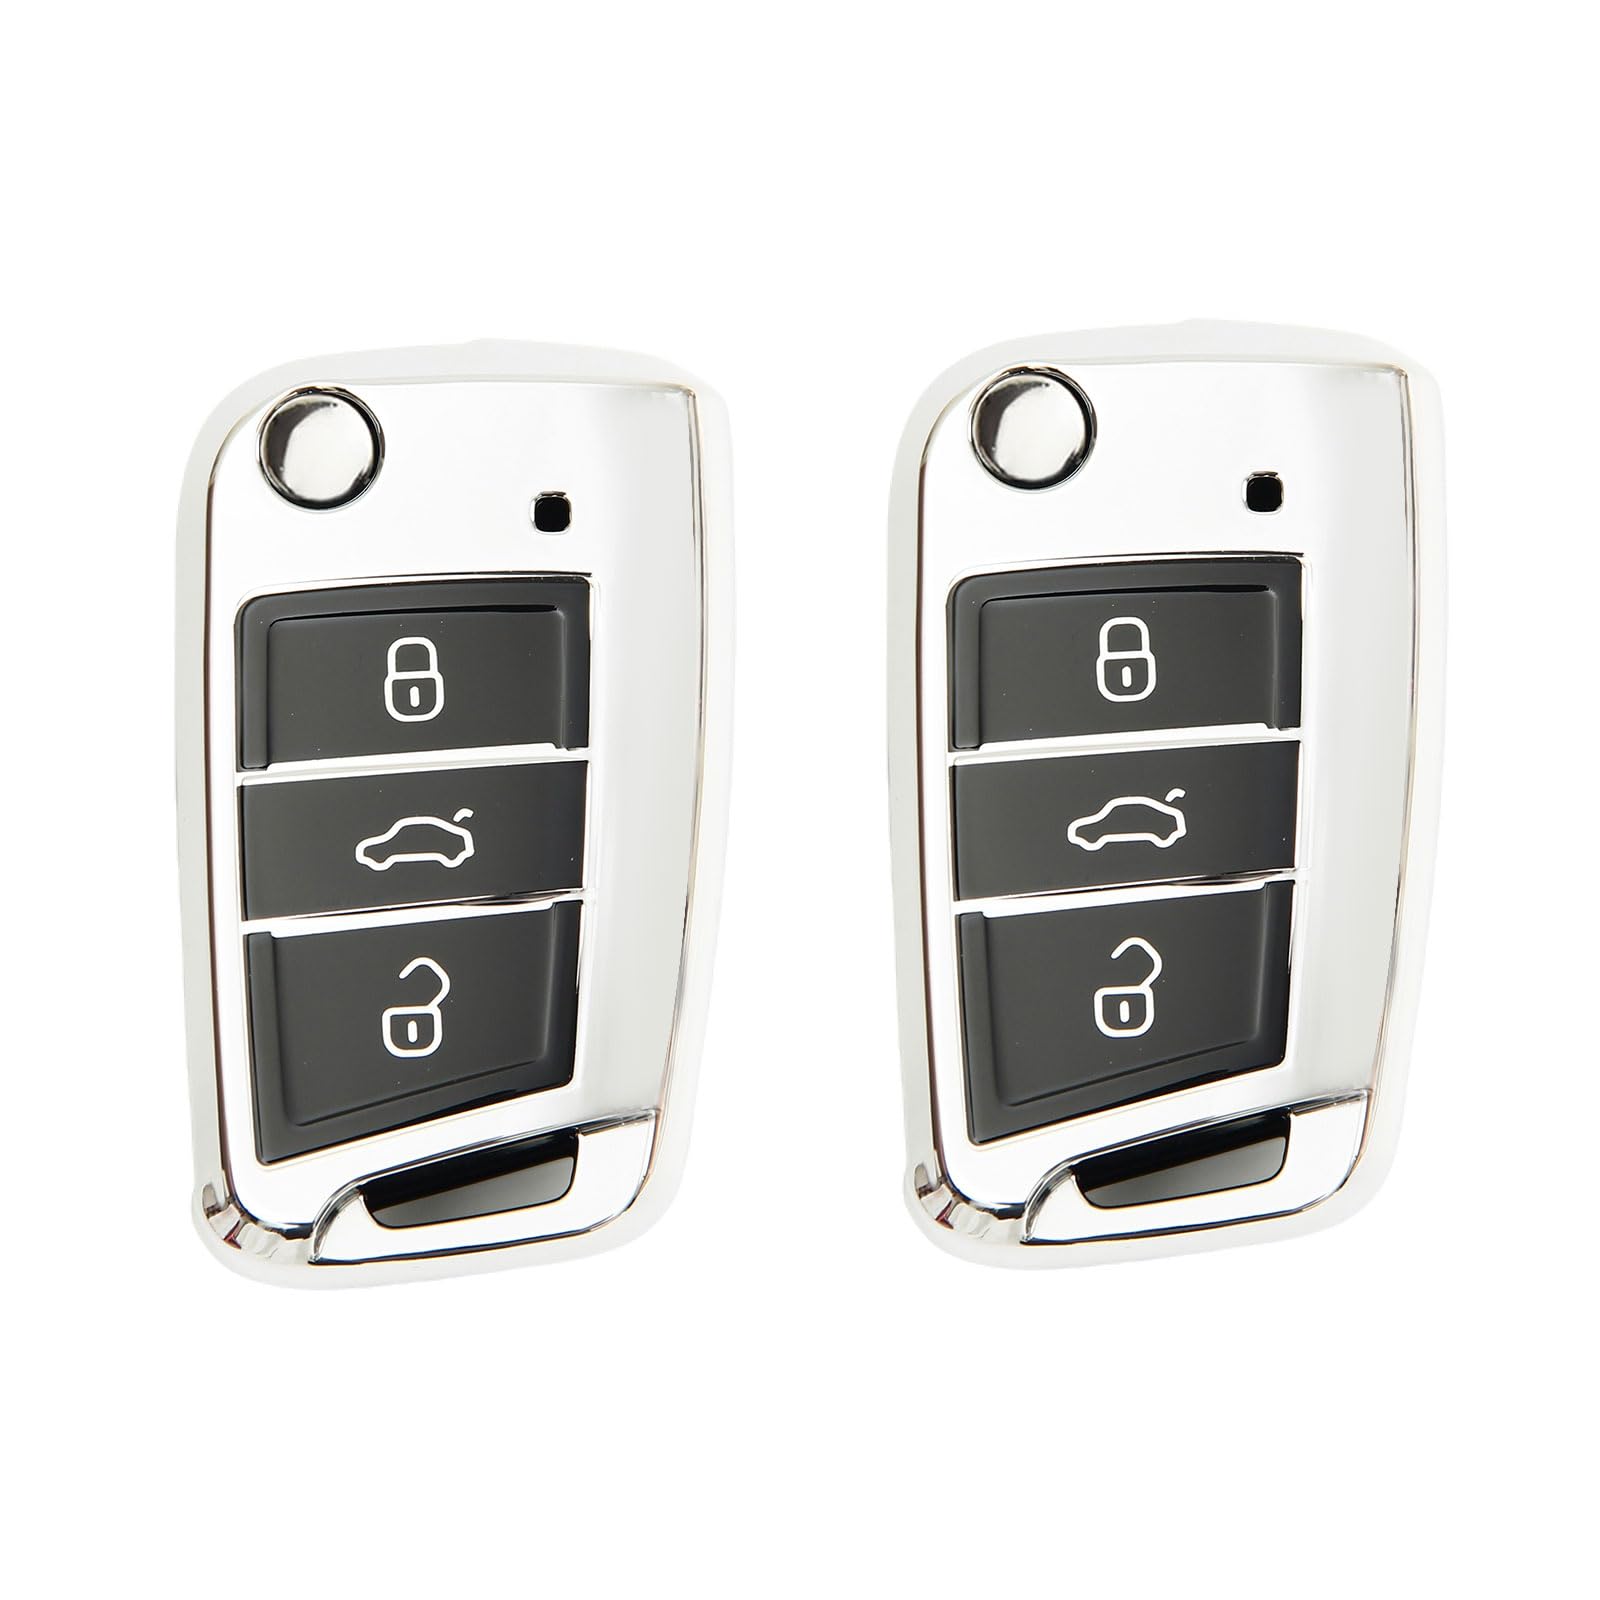 2 Stück Autoschlüssel Hülle, Schlüsselbox,Autoschlüssel Schutzhülle kompatibel mit VW Golf 7、Polo、Tiguan、Skoda 3-Tasten Schlüsselhülle (Silber 2 Stück) von Mythosurge